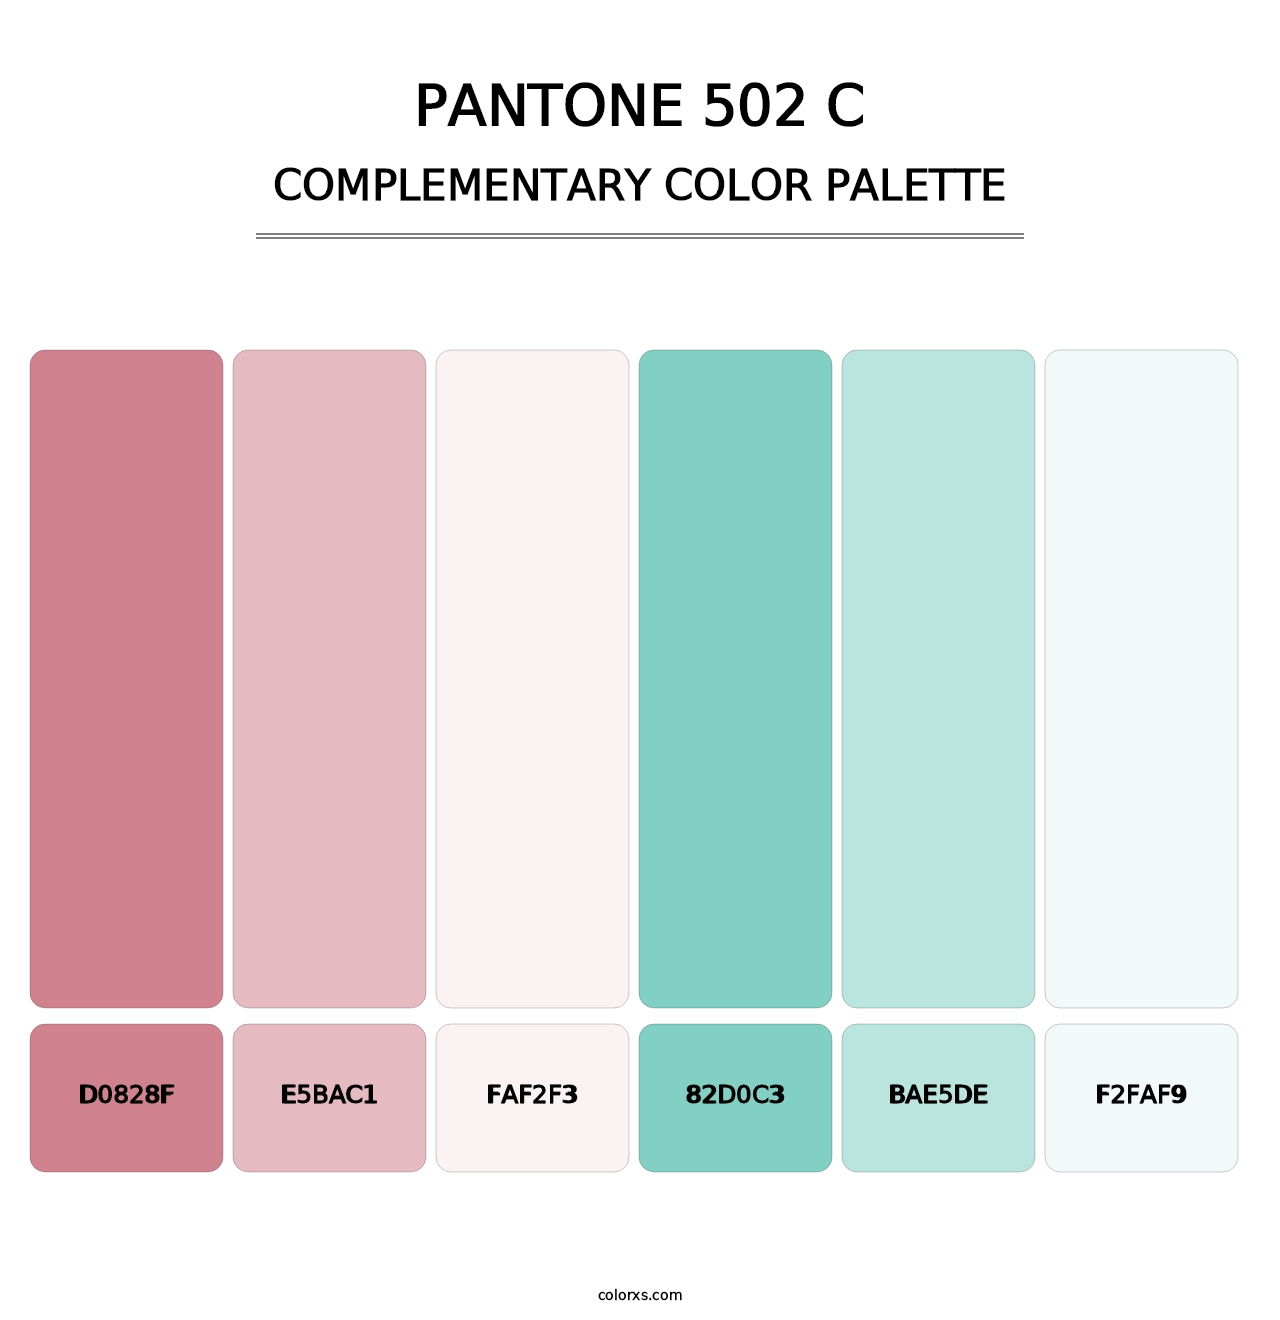 PANTONE 502 C - Complementary Color Palette